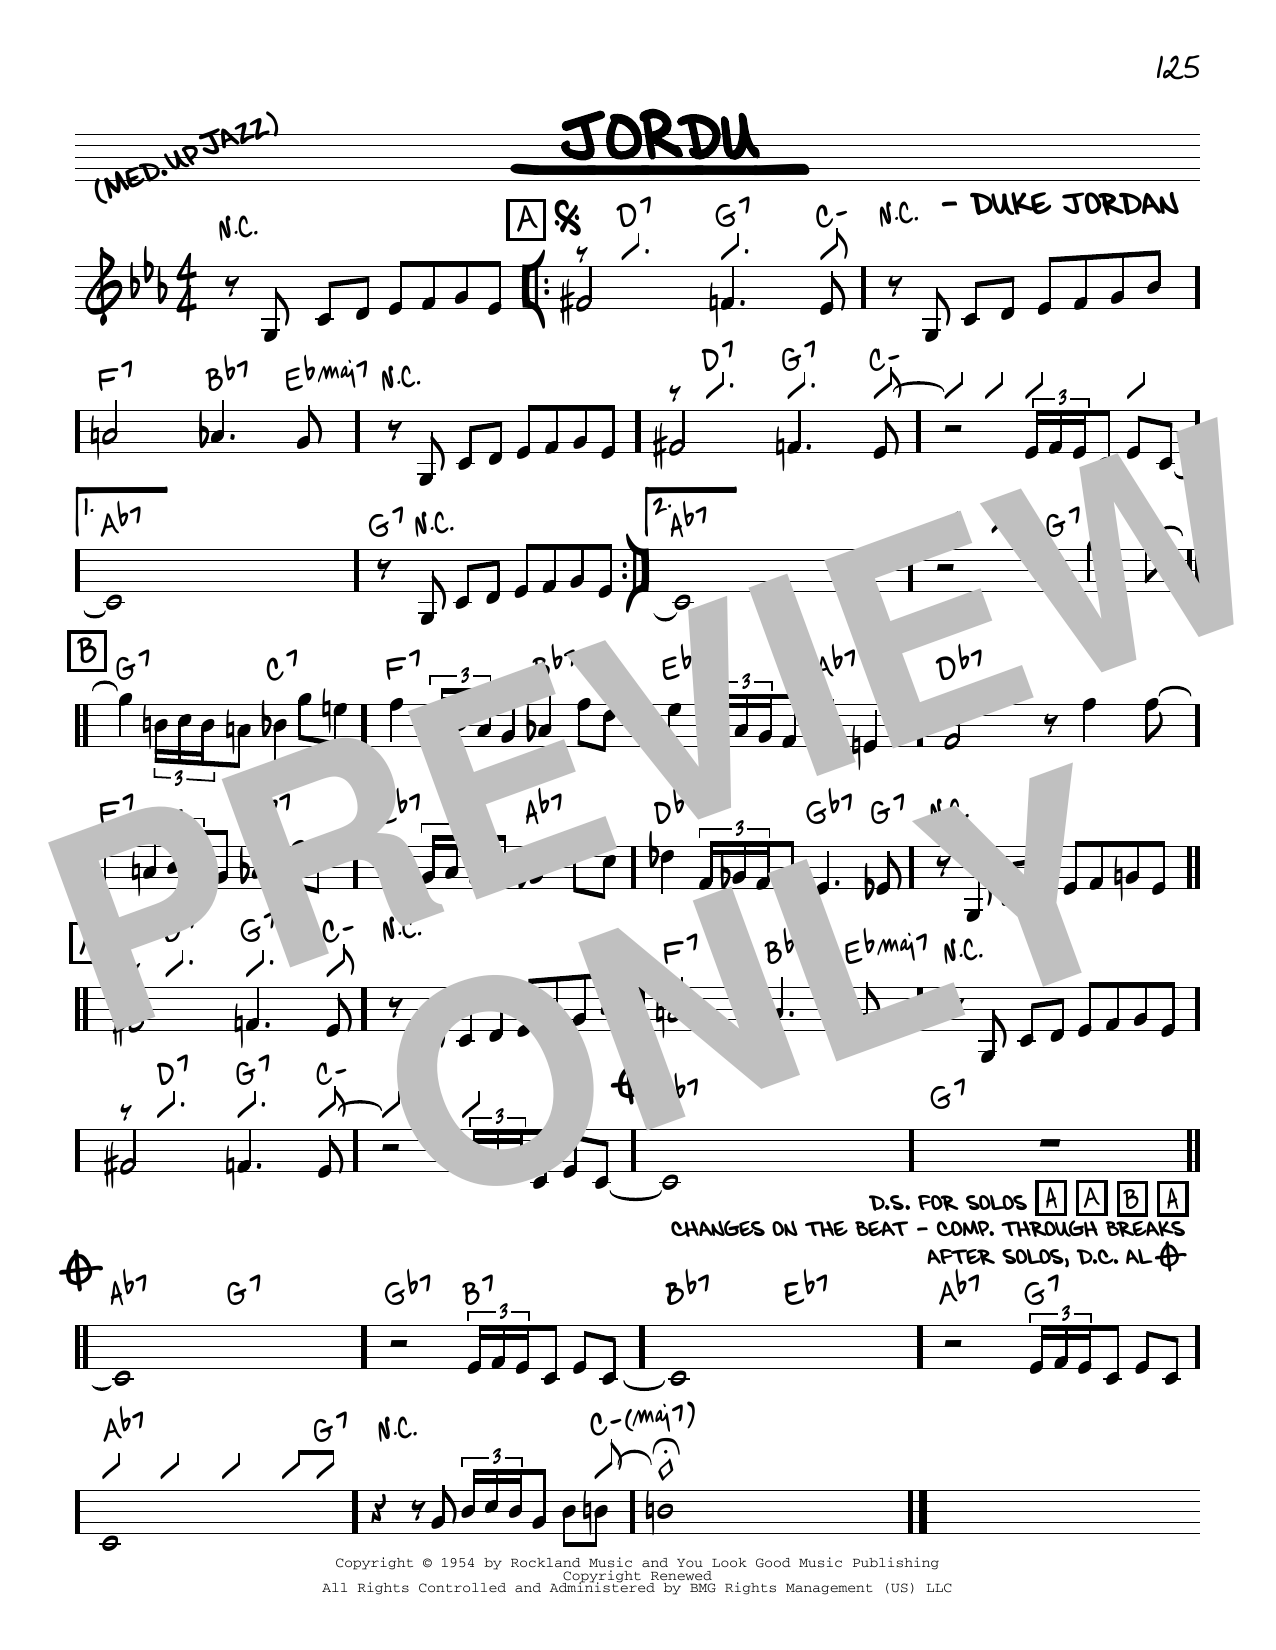 Duke Jordan Jordu Sheet Music Notes & Chords for Real Book - Melody & Chords - Bass Clef Instruments - Download or Print PDF